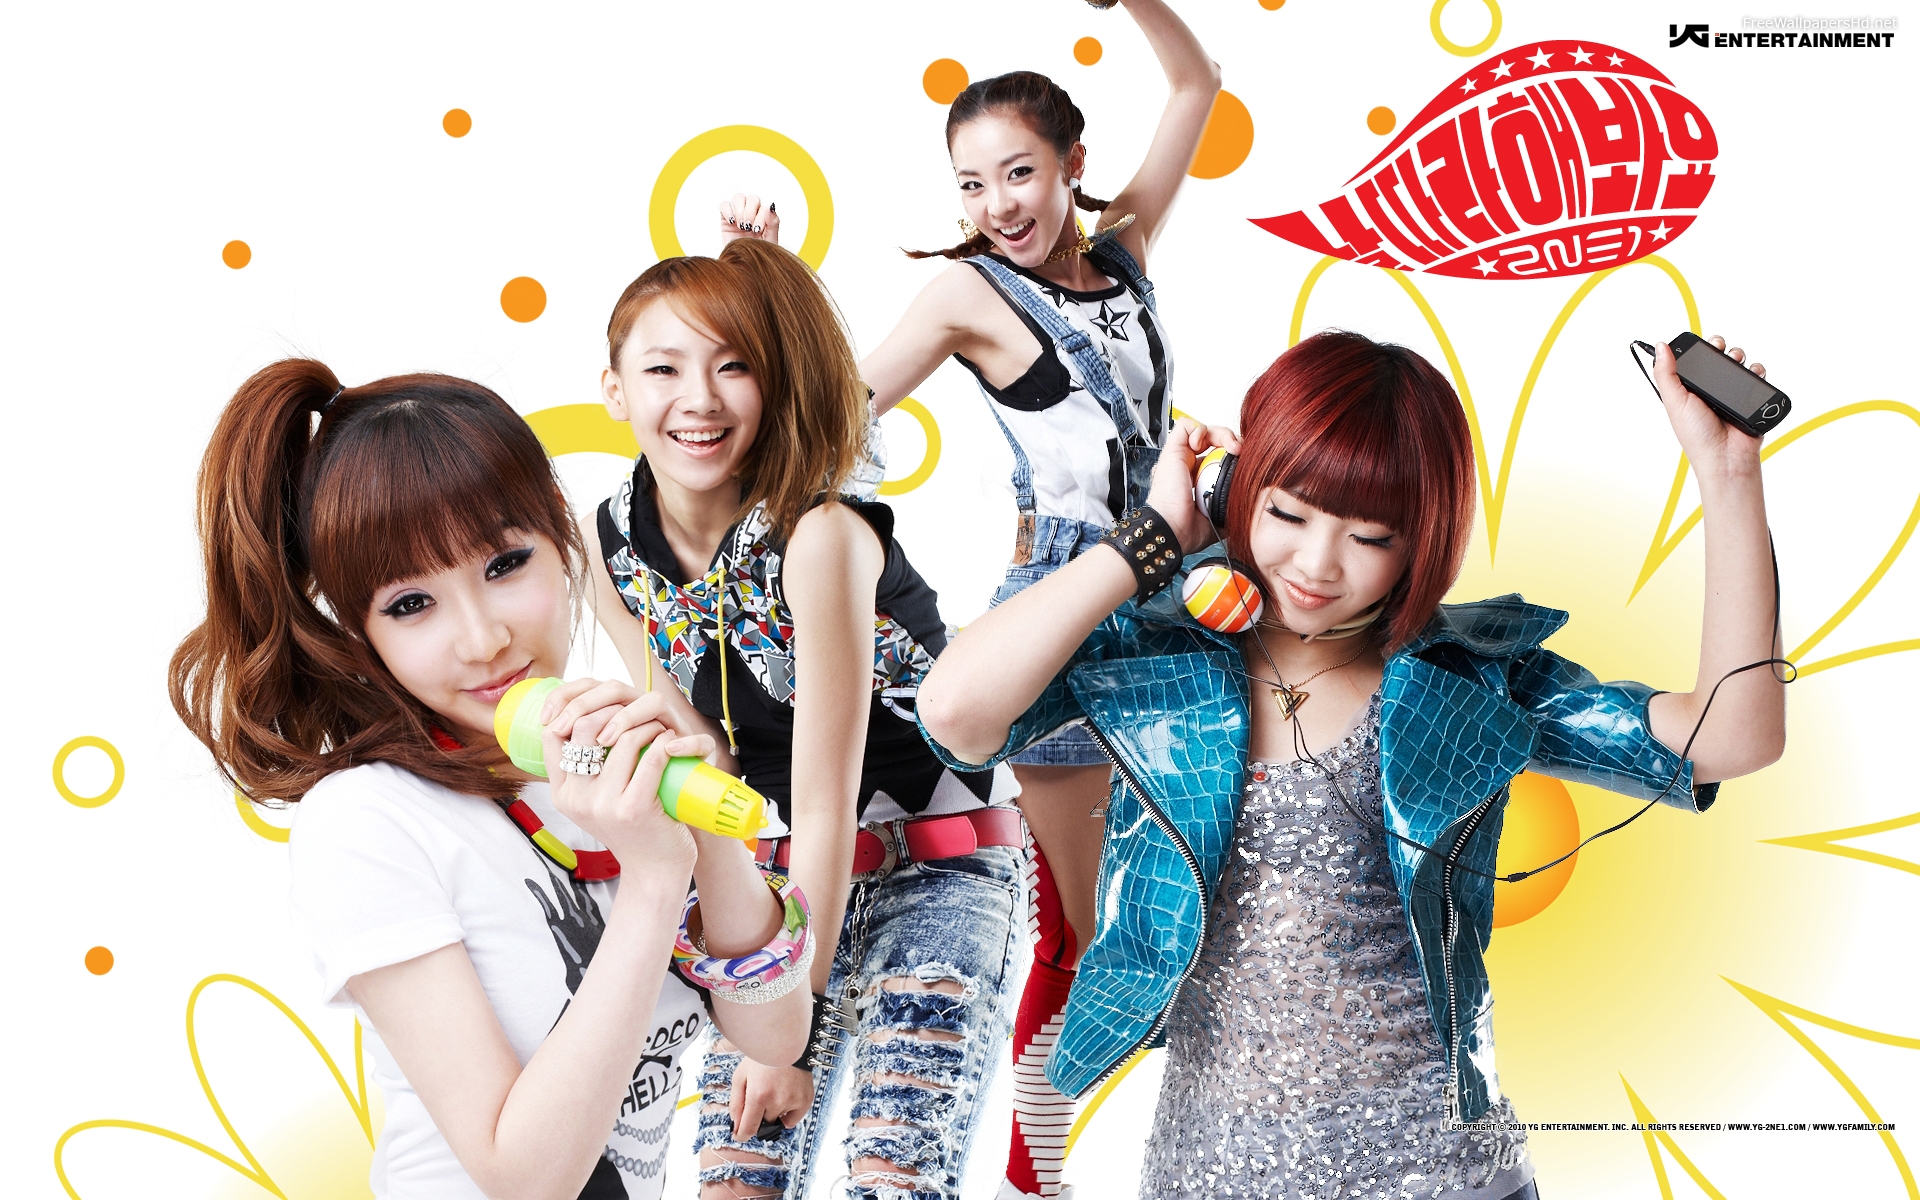 ♥K-pop♥ - kpop 4ever Wallpaper (33571504) - Fanpop